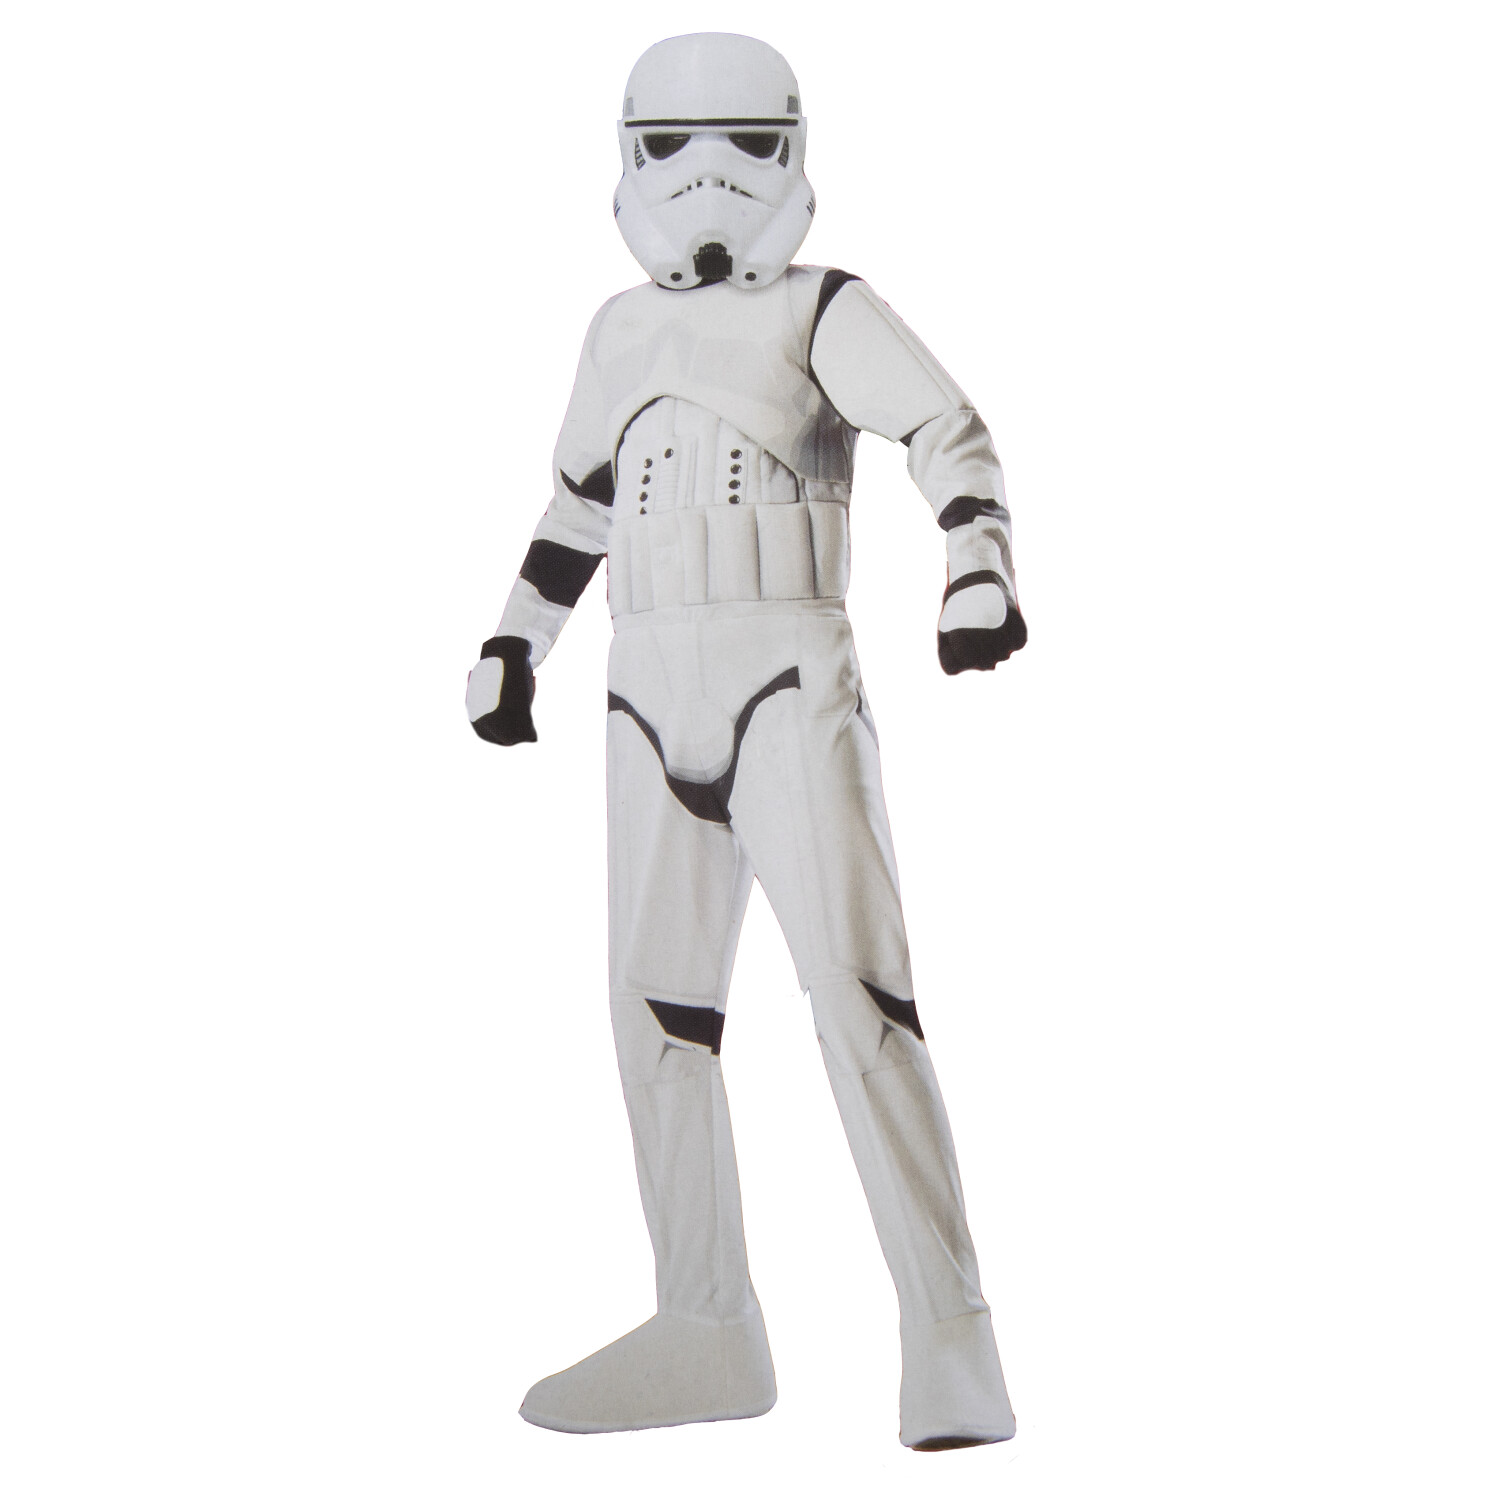 Rubies Costume Co Star Wars Rebels Stormtrooper Halloween Costume Child - M - White - image 1 of 2